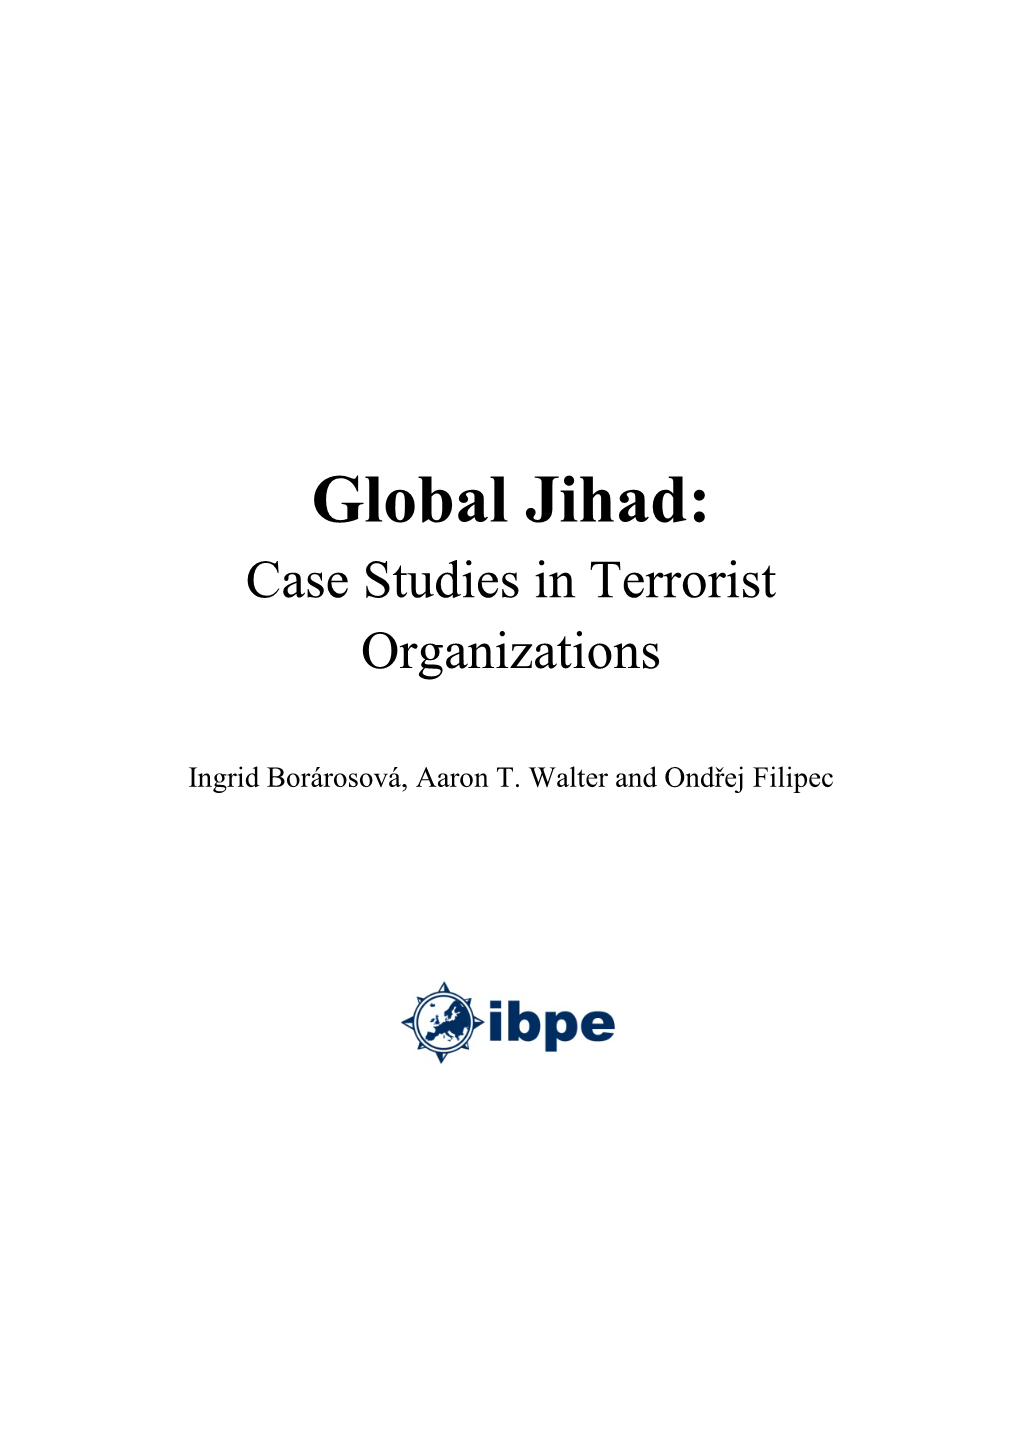 Global Jihad: Case Studies in Terrorist Organizations